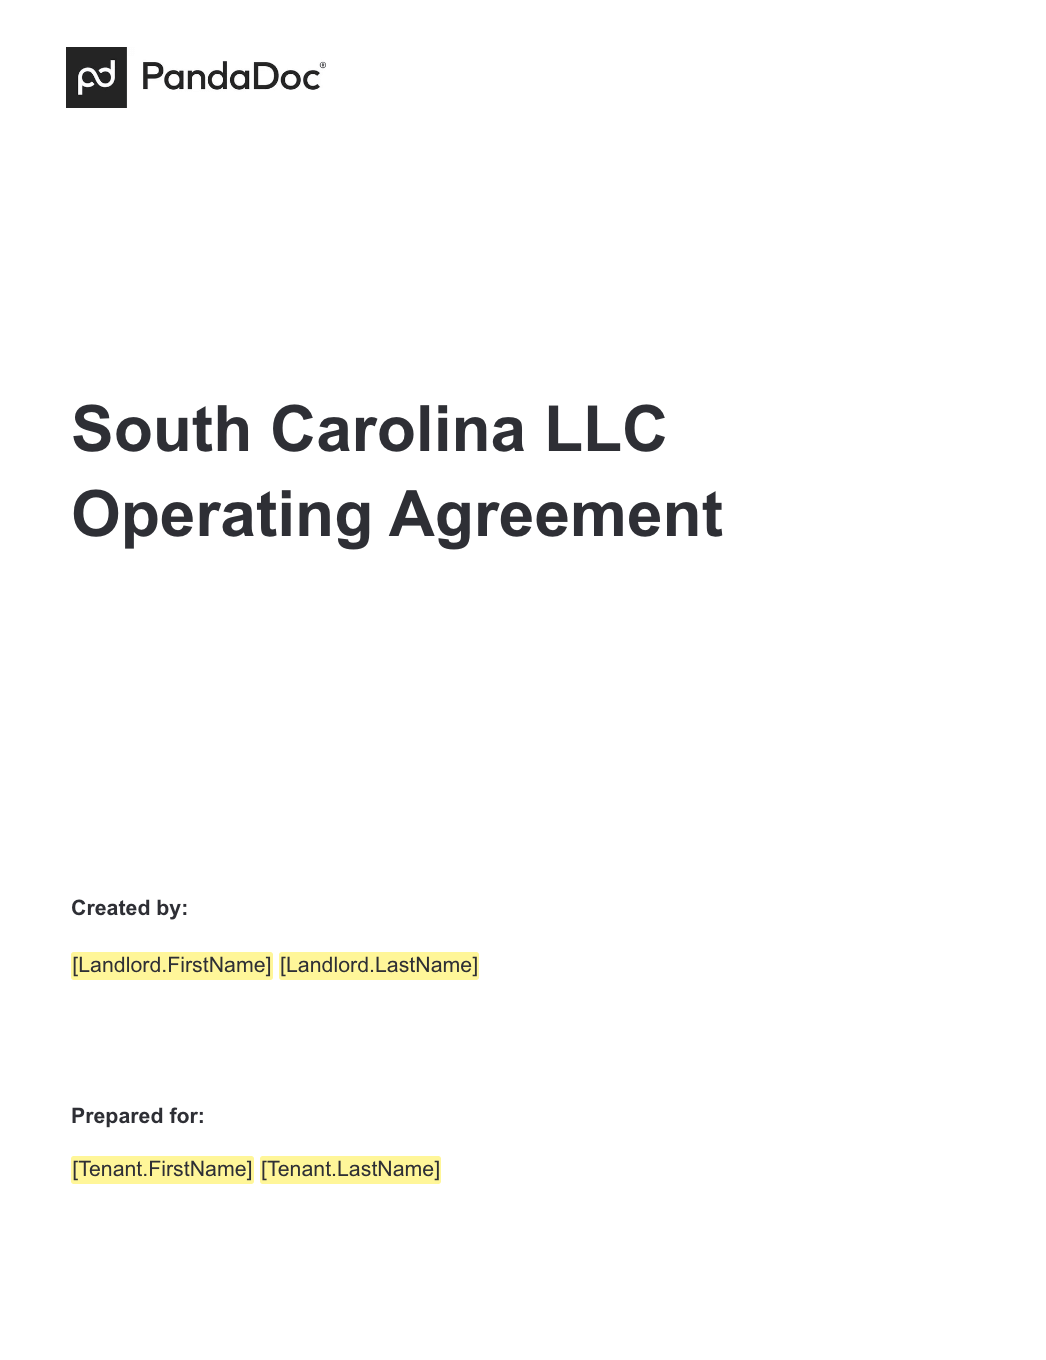 South Carolina LLC Operating Agreement 